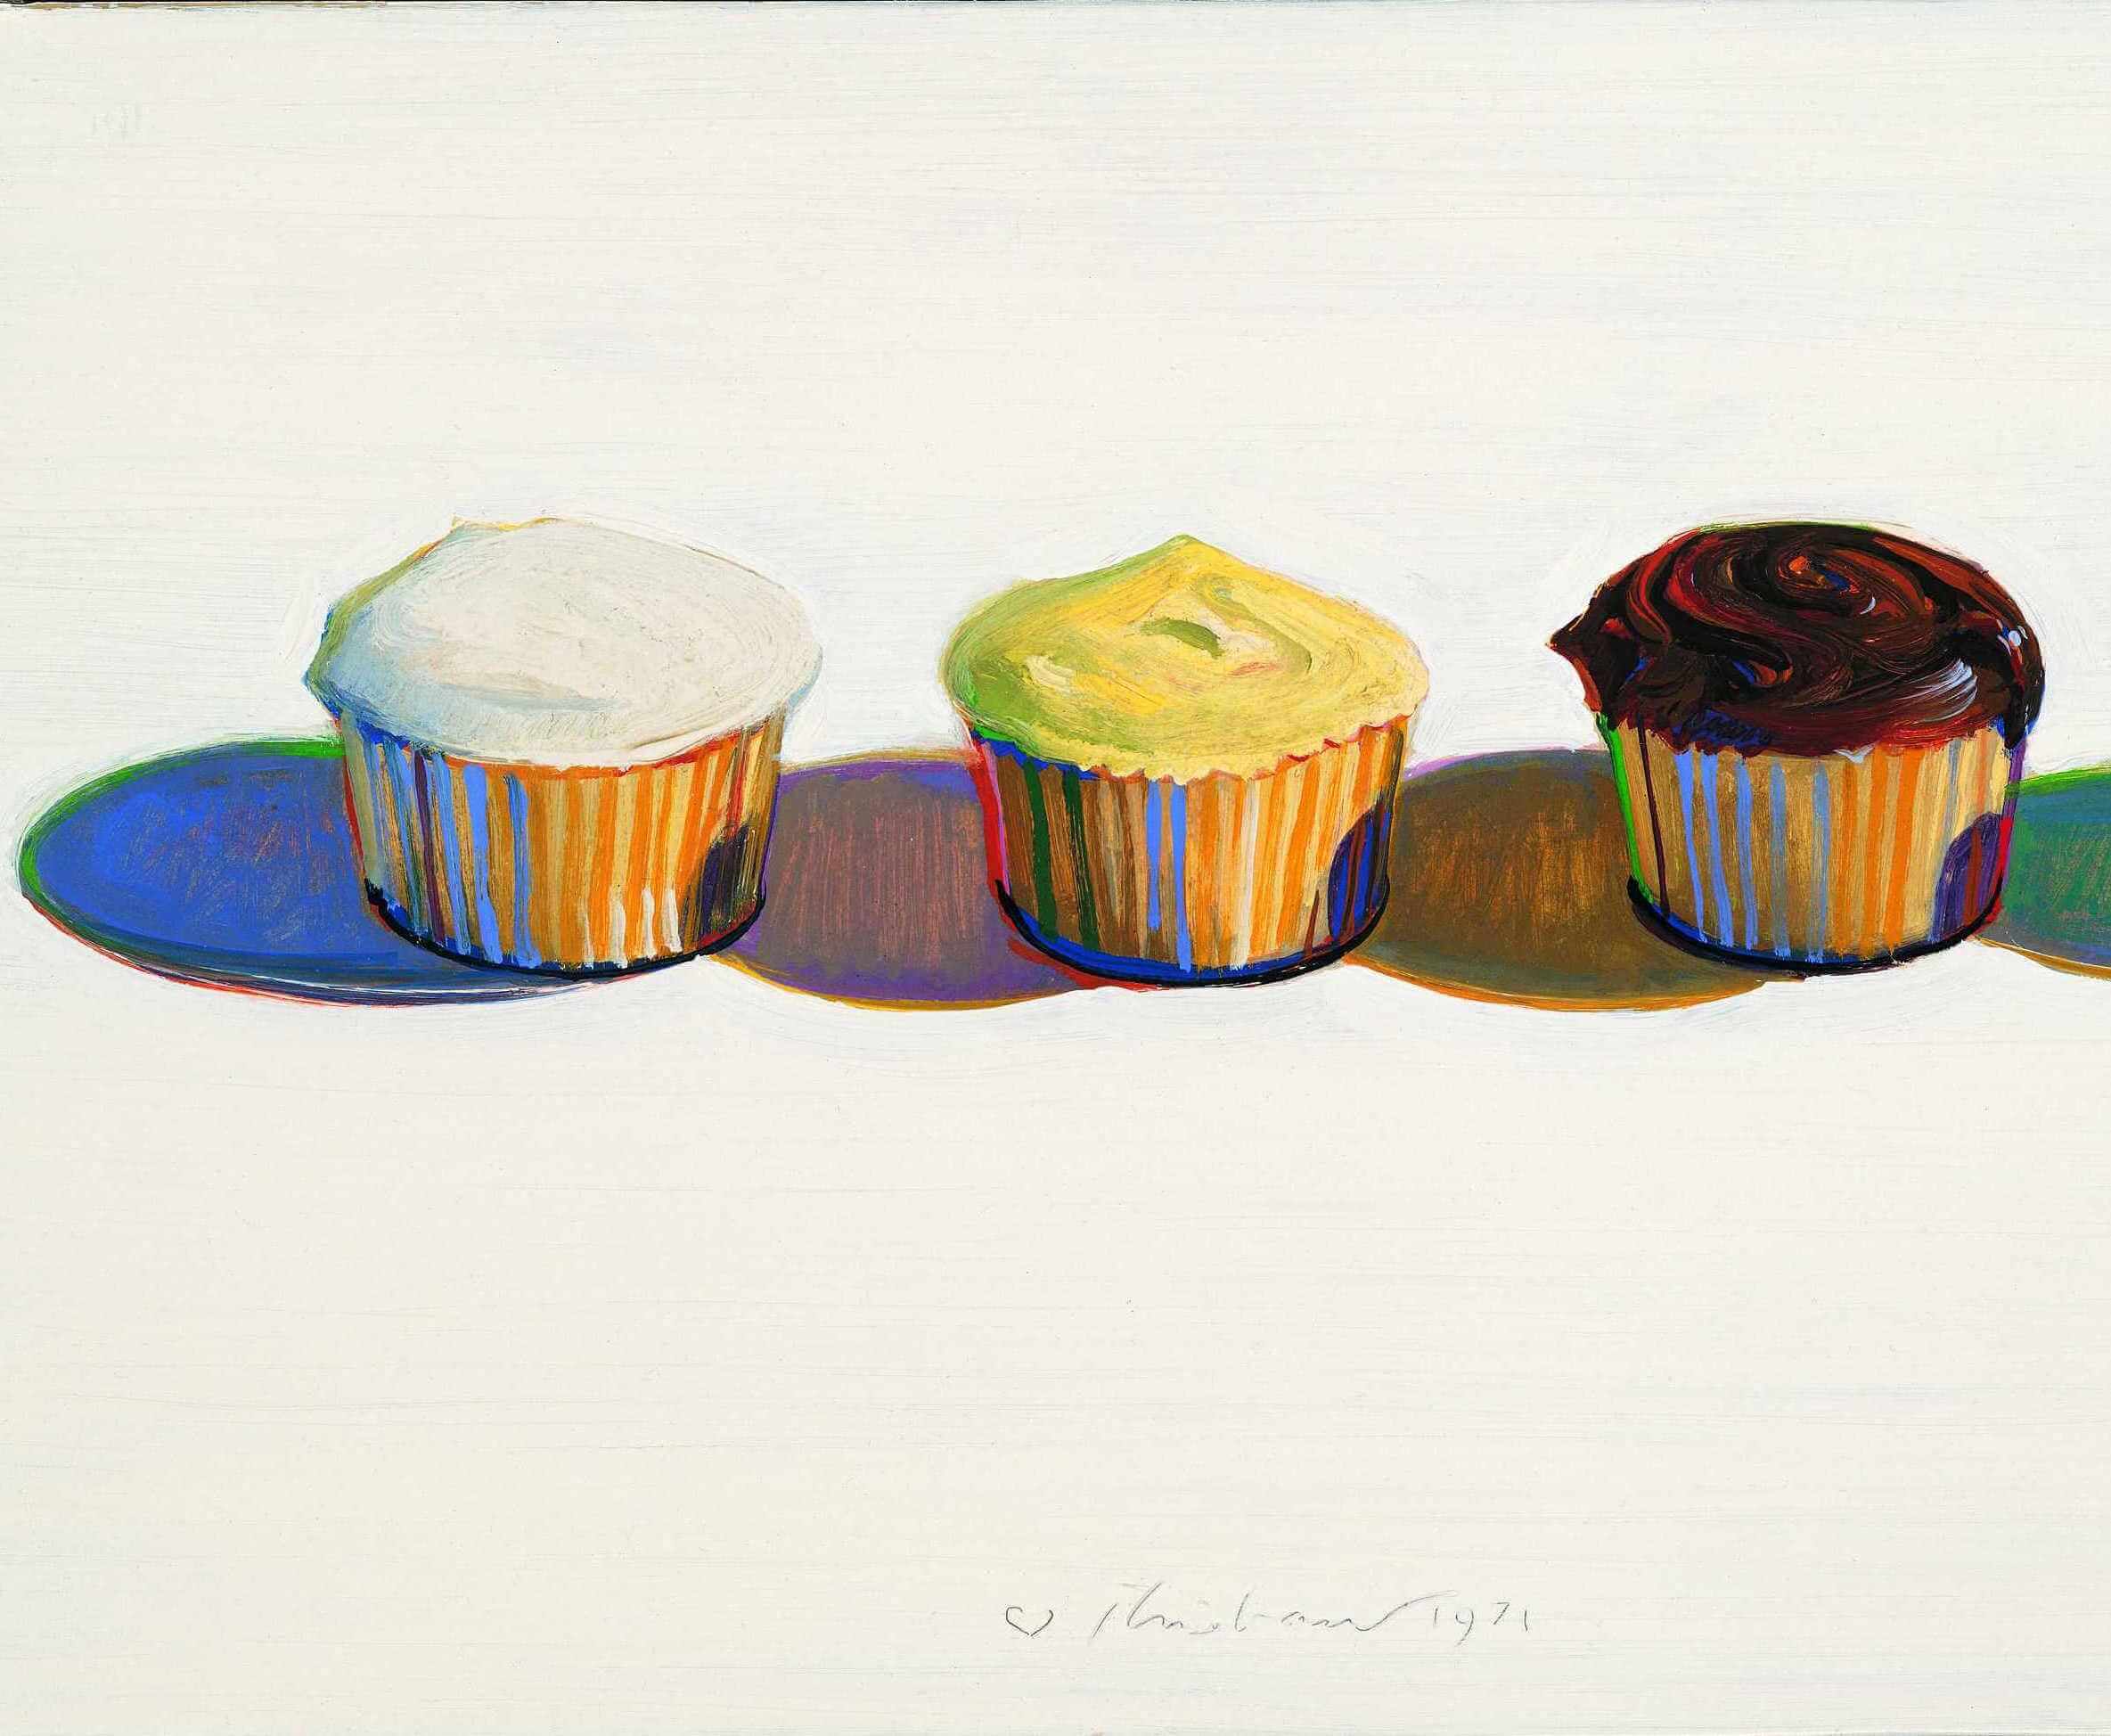 (detail) Wayne Thiebaud , Four Cupcakes, 1971 (Bologna Museum of Modern Art / Morandi Museum)